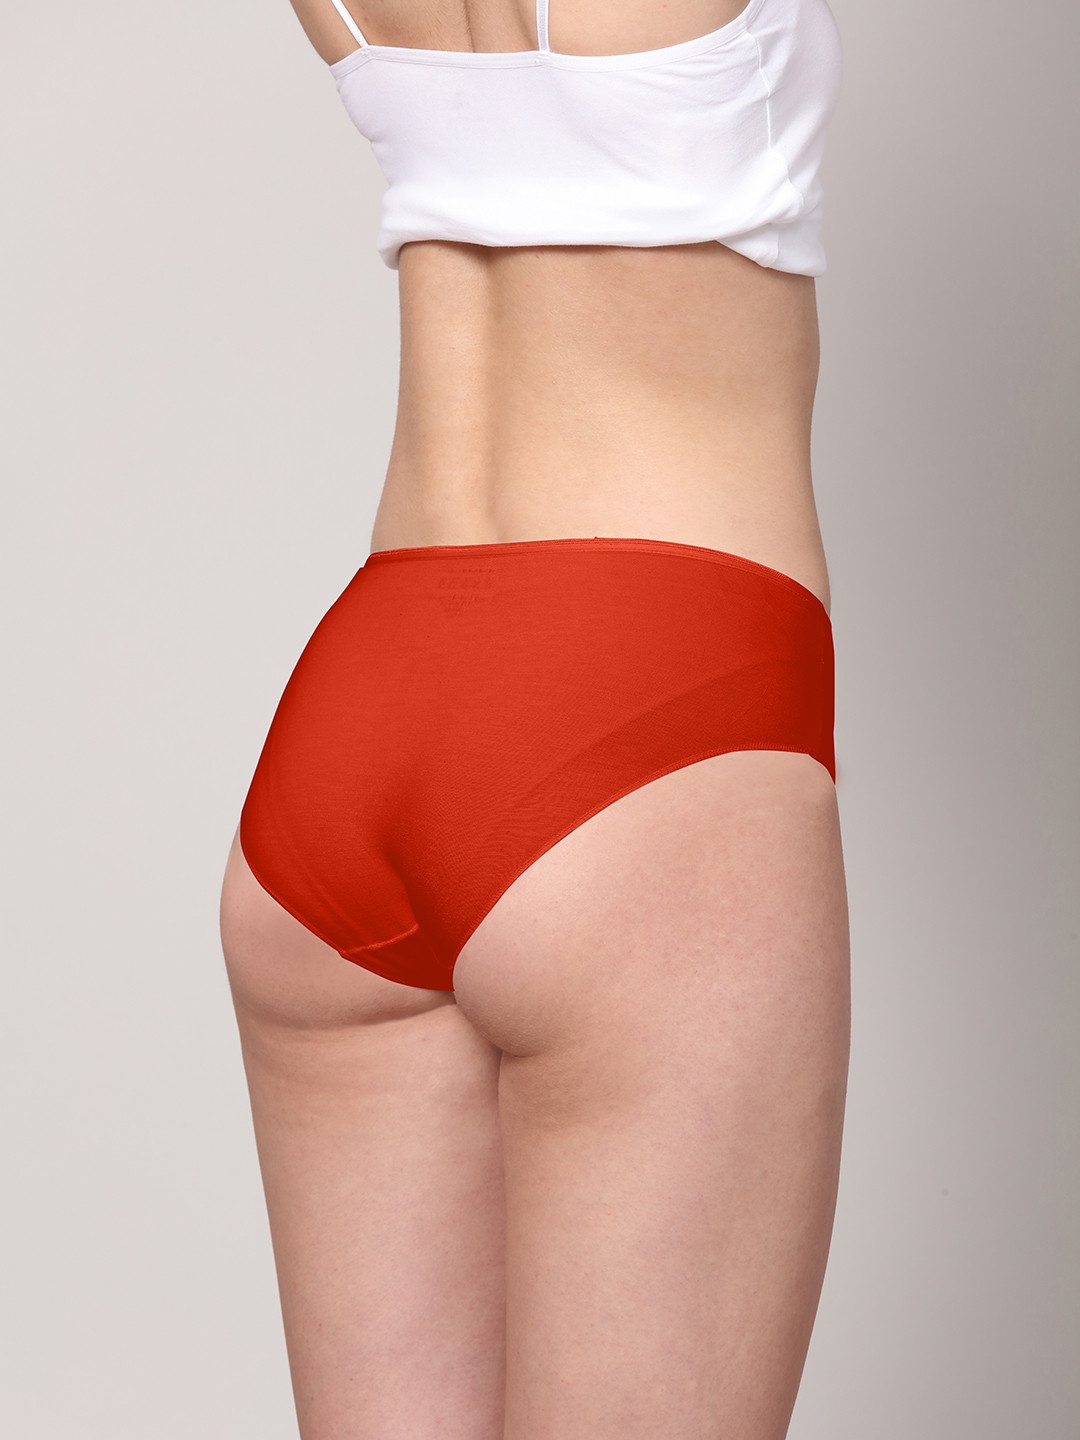 AshleyandAlvis | AshleyandAlvis Women's Panties Micro Modal, Anti Bacterial, Skinny Soft, Premium Hipster  -No Itching, Sweat Proof, Double In-seam Gusset 4